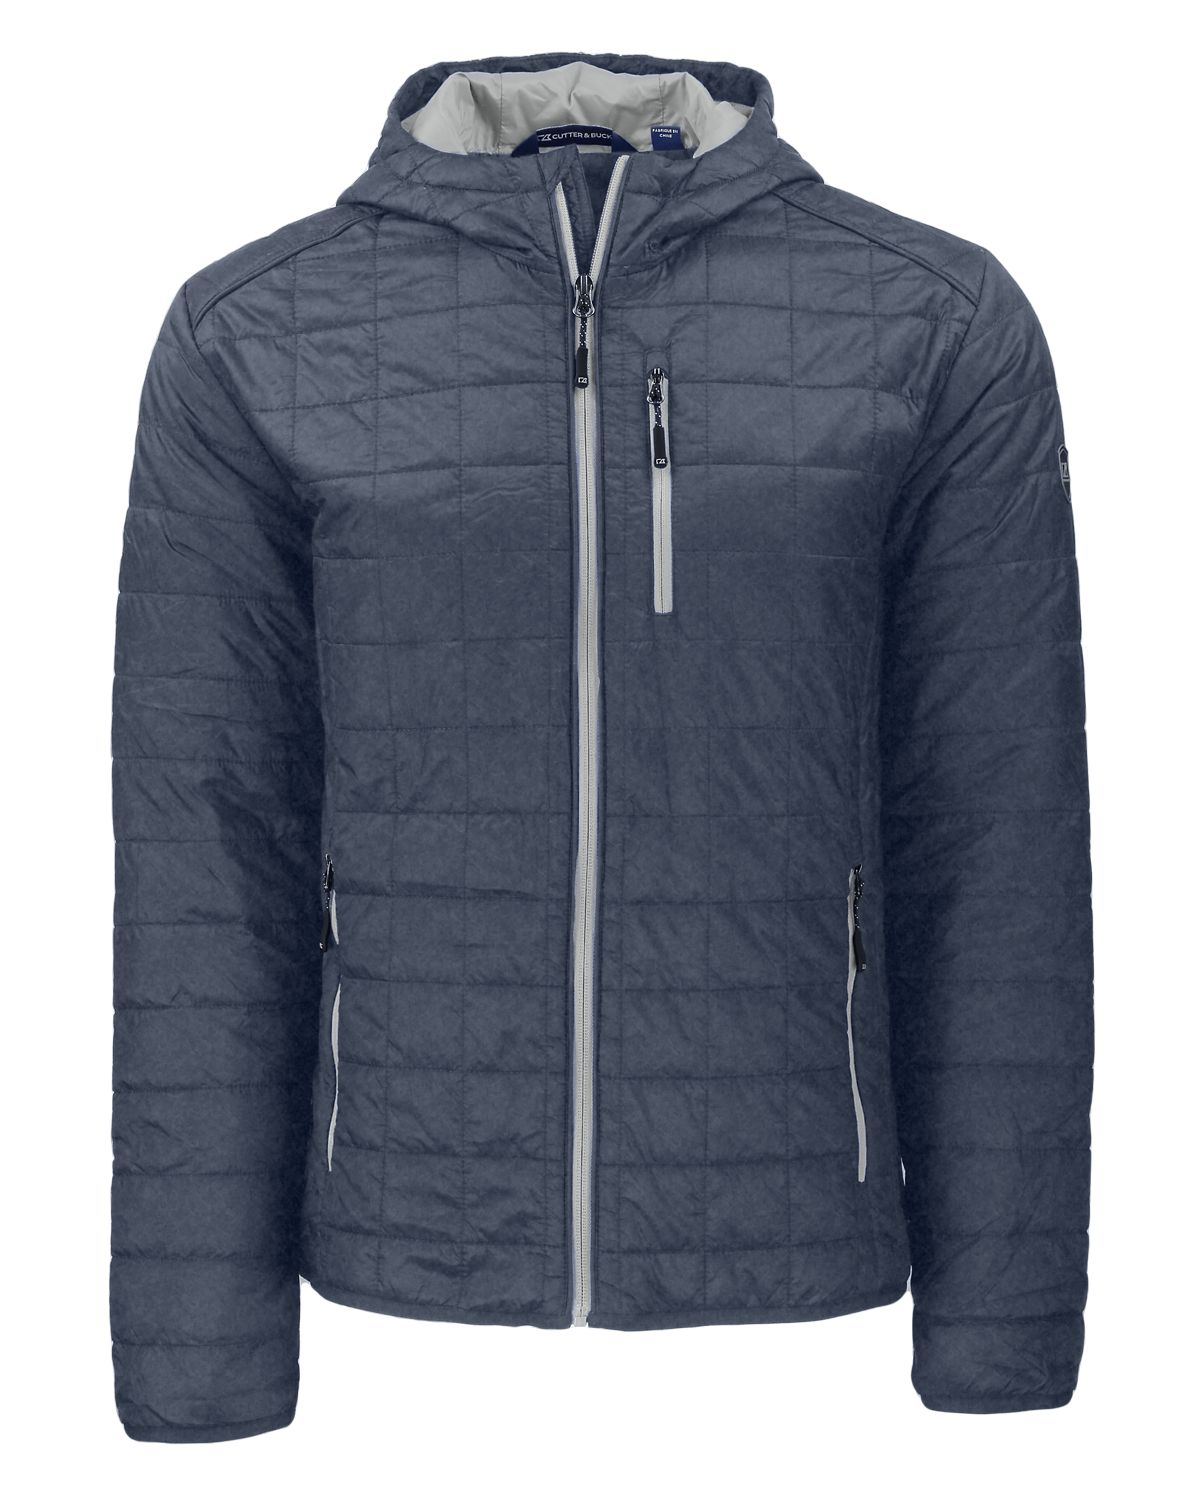 CUTTER & BUCK MCO00091 - Men's Rainier Primaloft Eco Full Zip Hooded Jacket